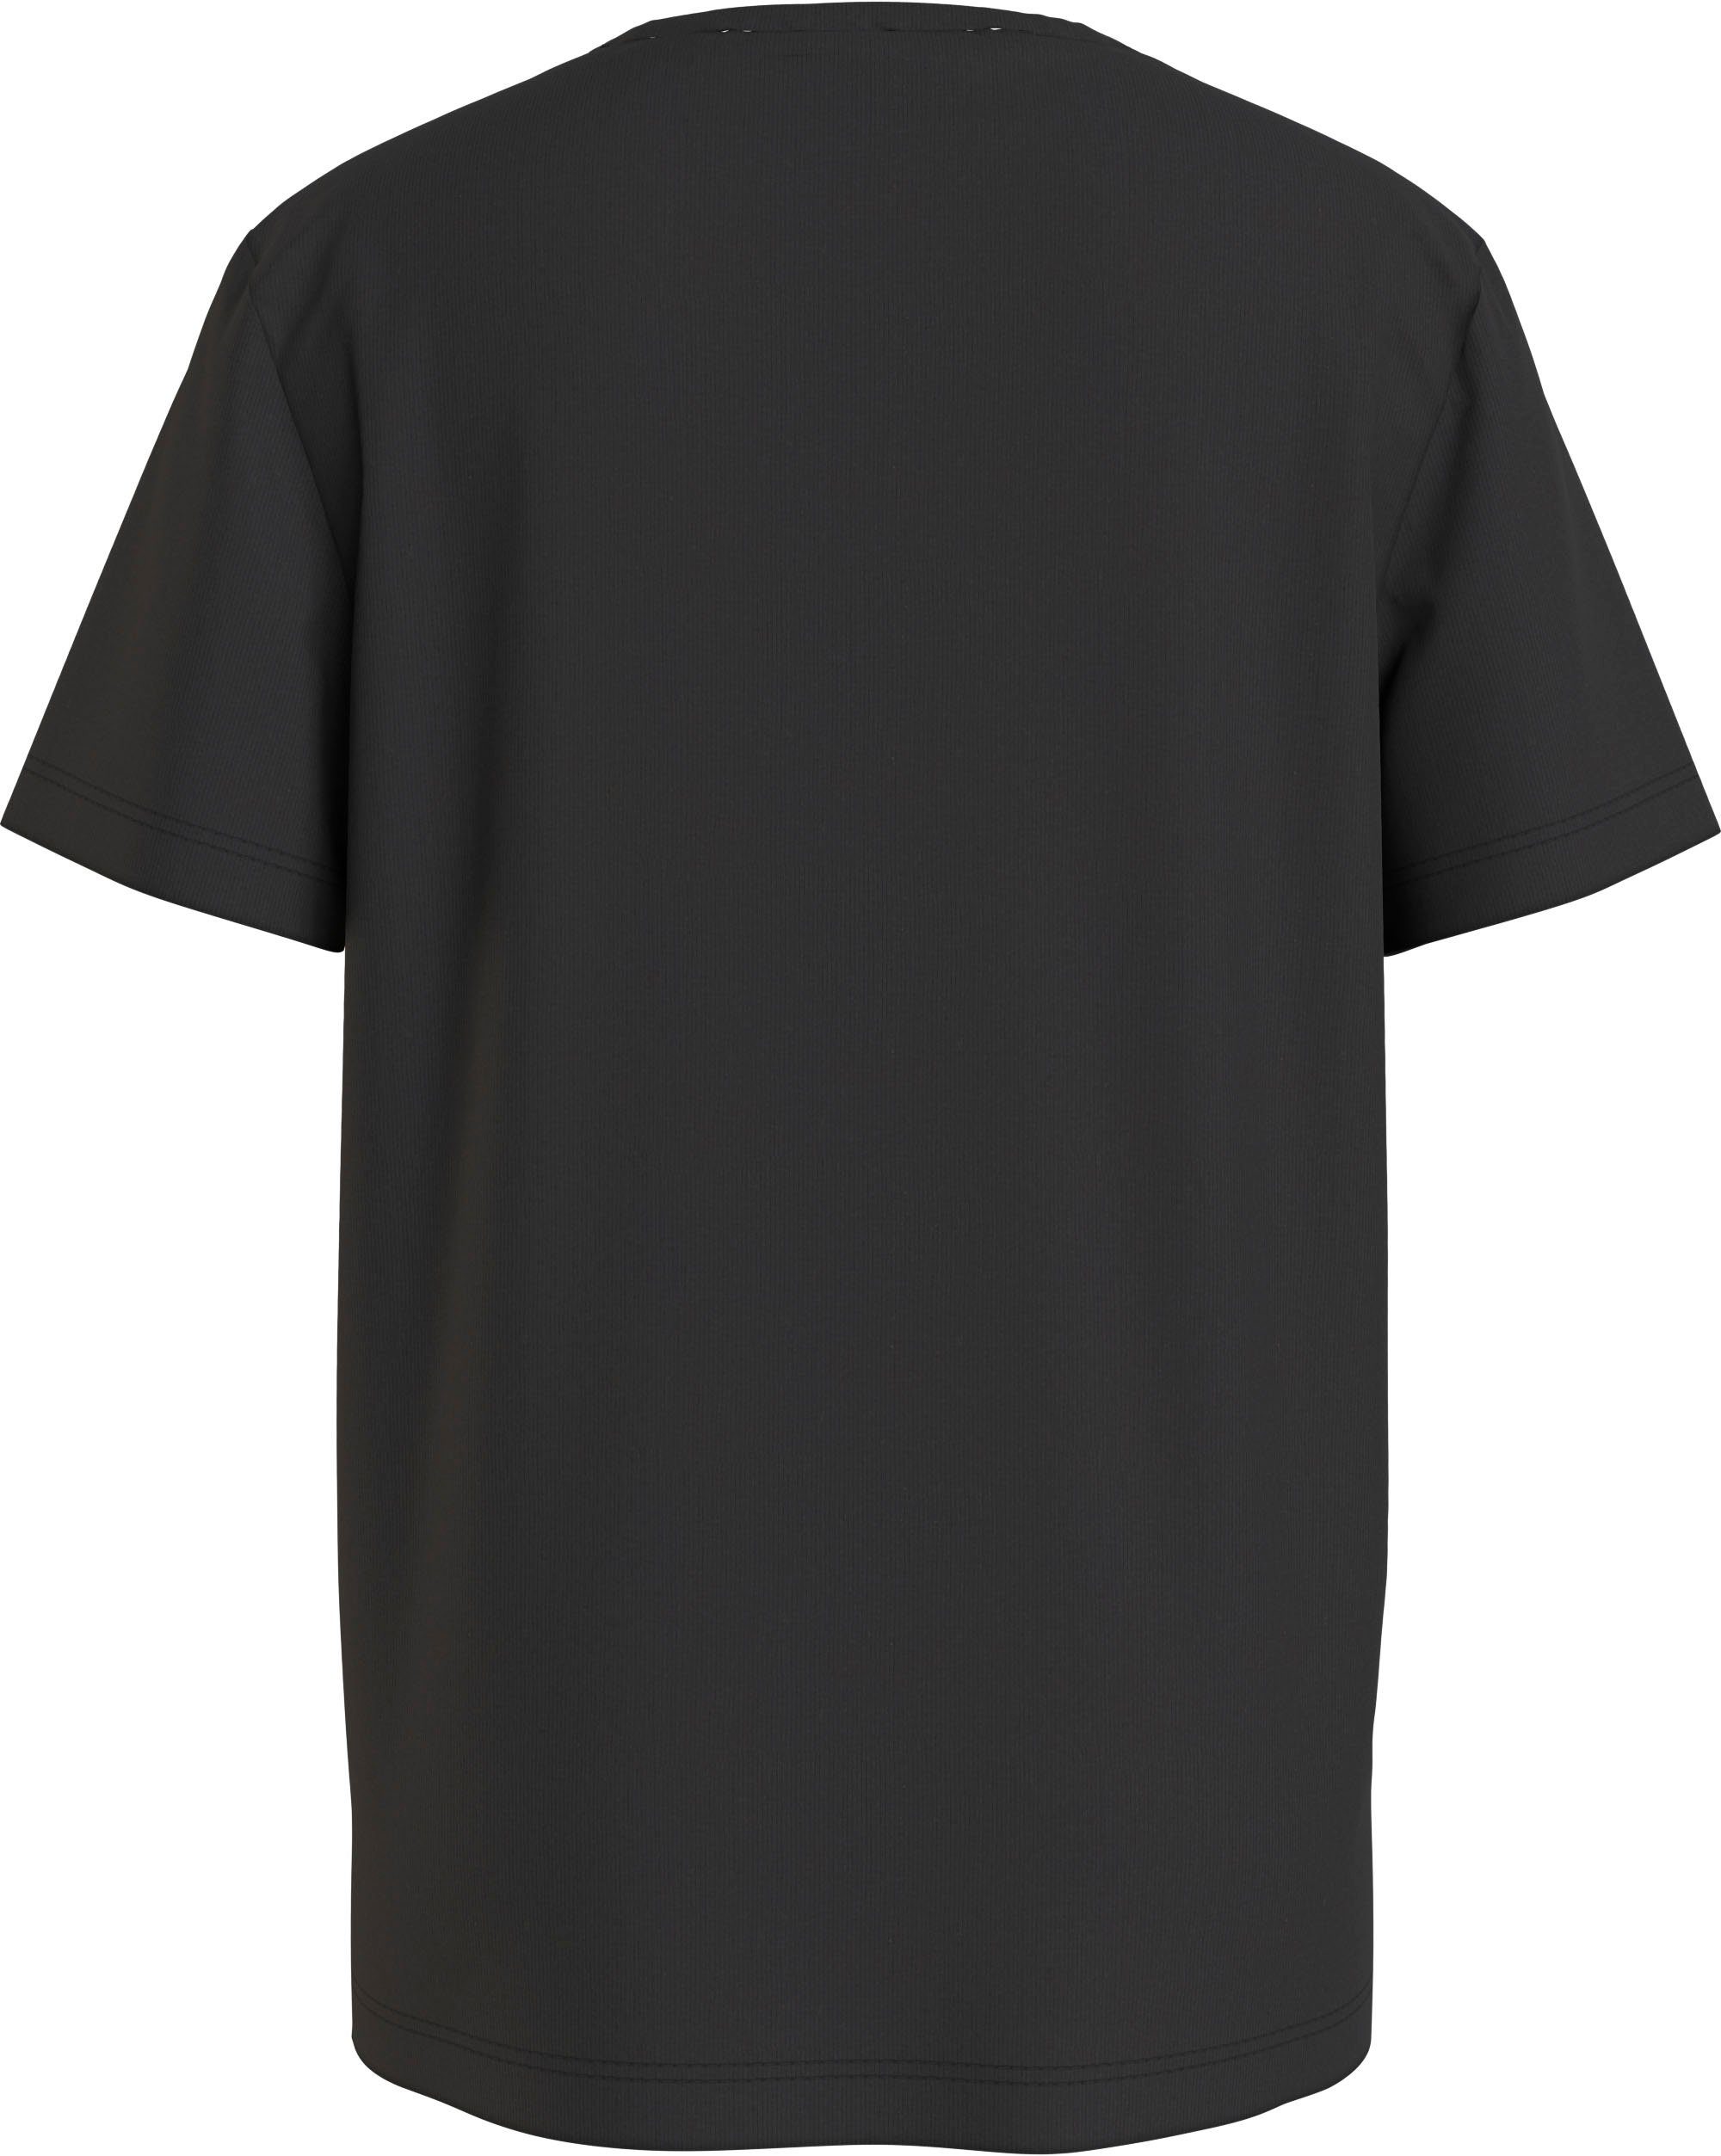 Calvin Klein Jeans Black TOP T-Shirt Ck MONOGRAM CHEST